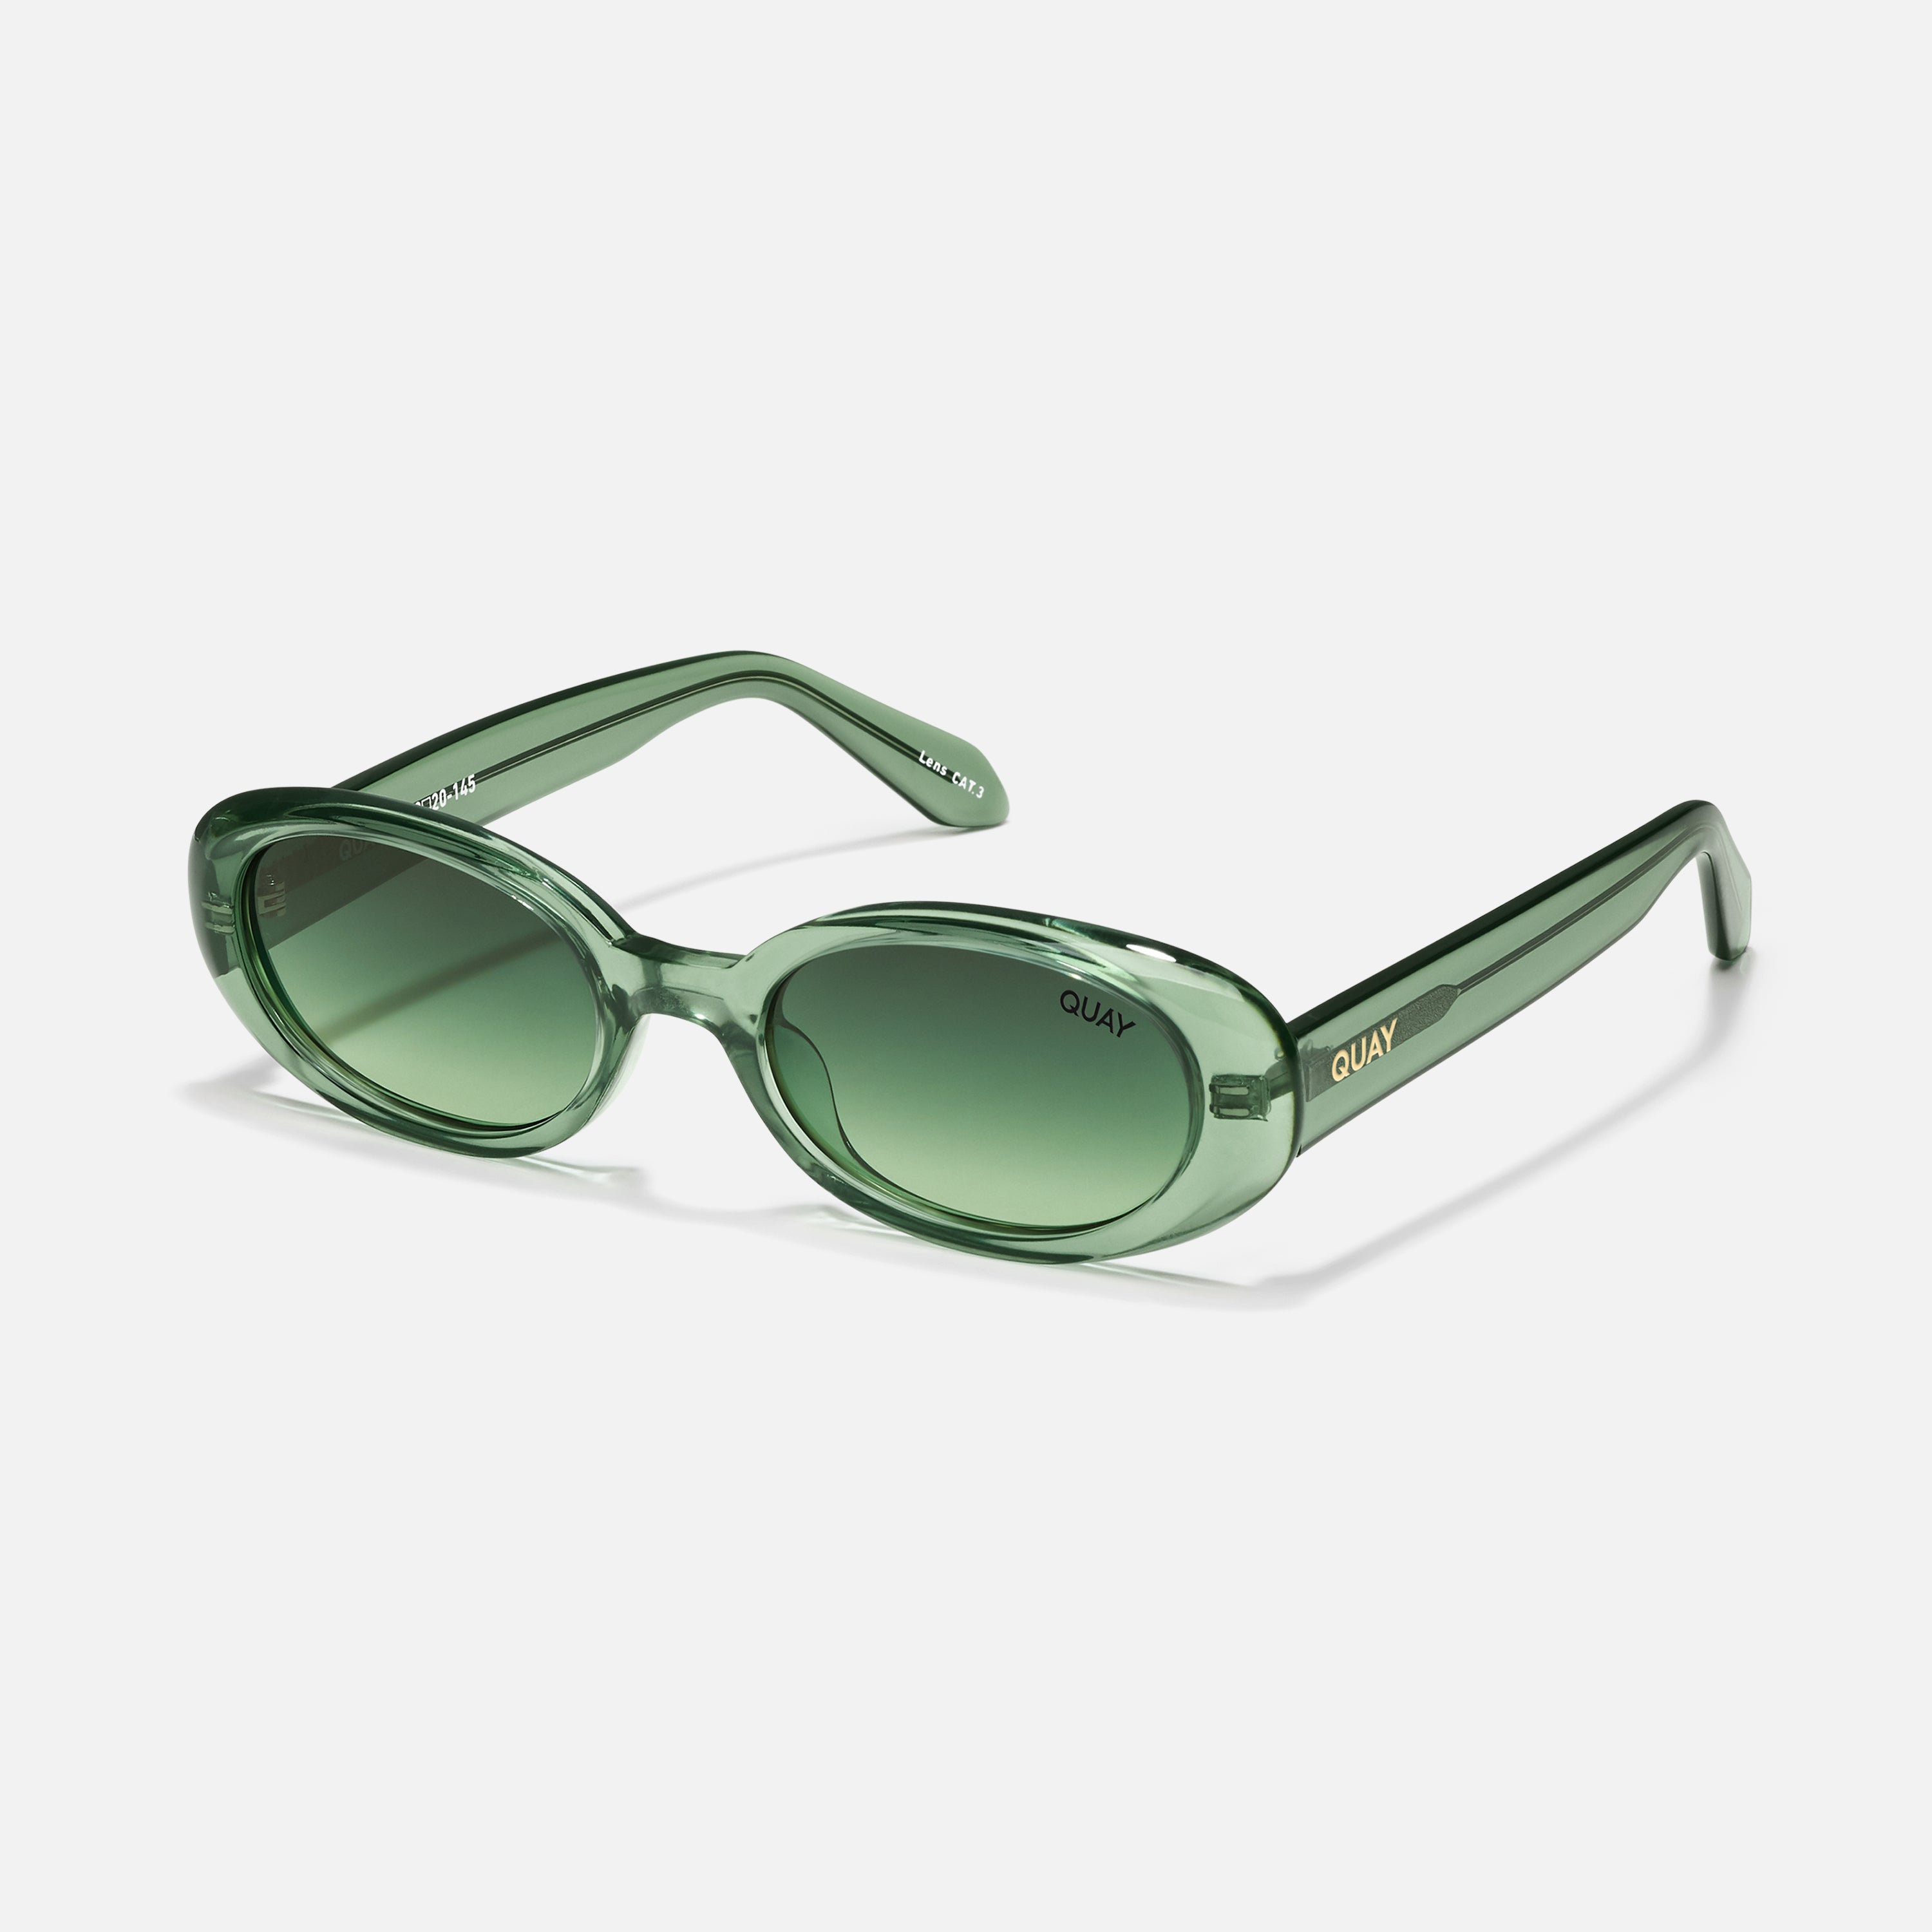 FELT CUTE Round Sunglasses SALE – Quay